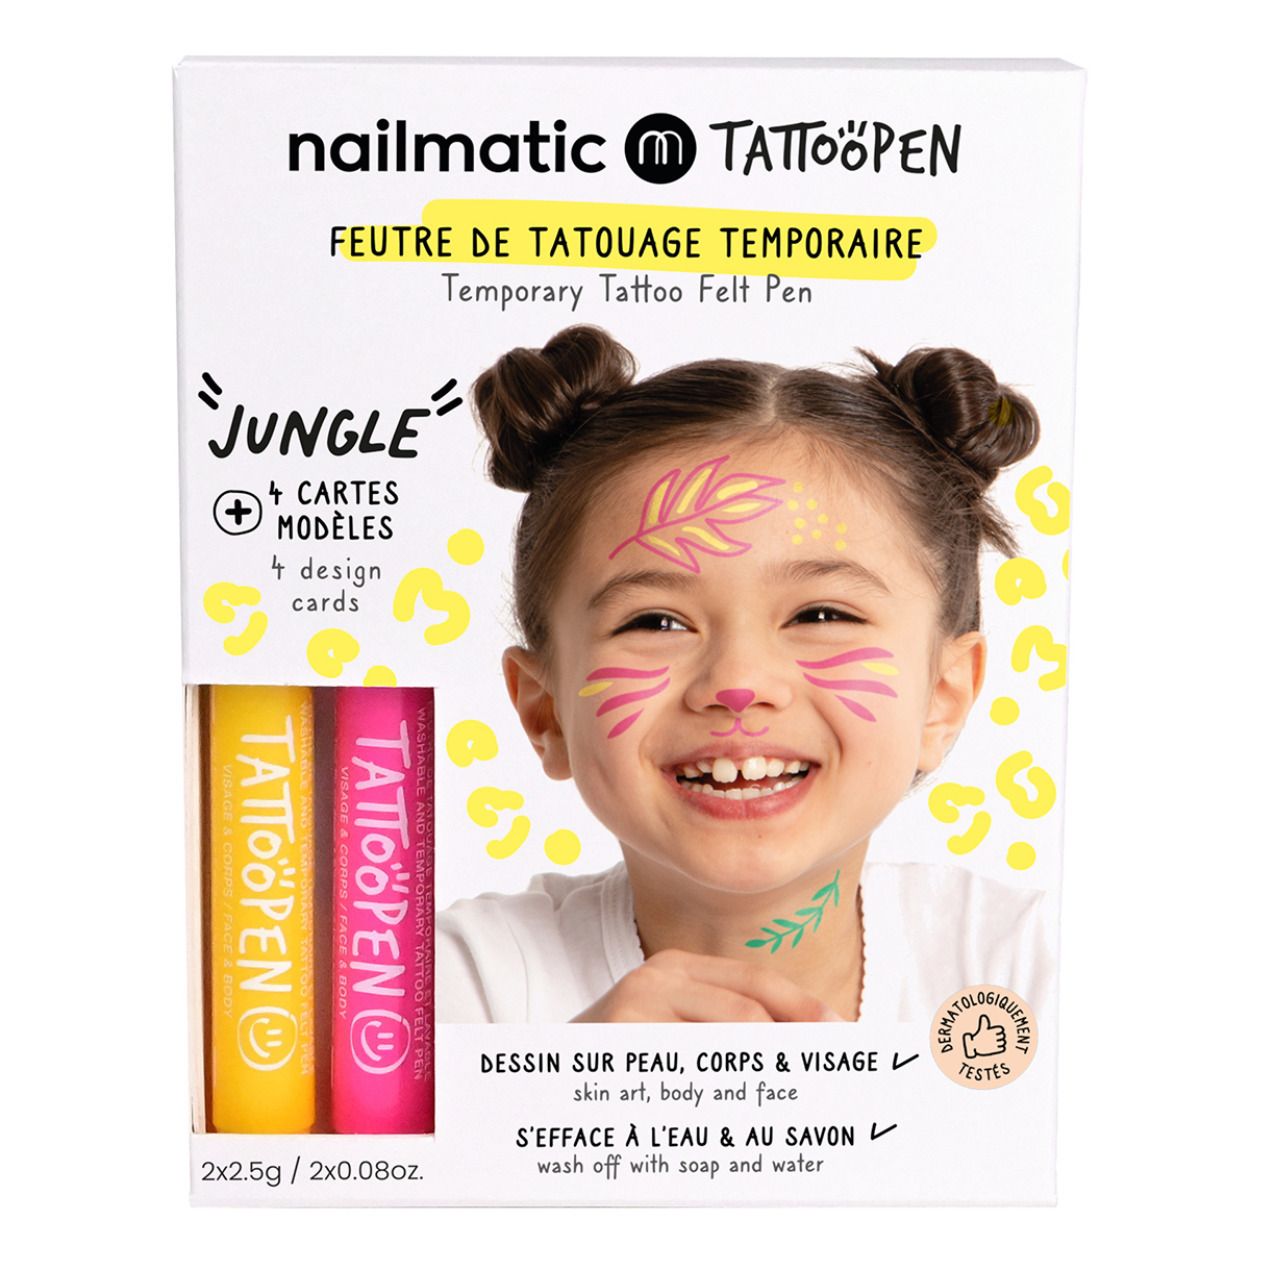 Nailmatic Kids - Coffret Kit duo feutre de tatouage Tattoopen Jungle